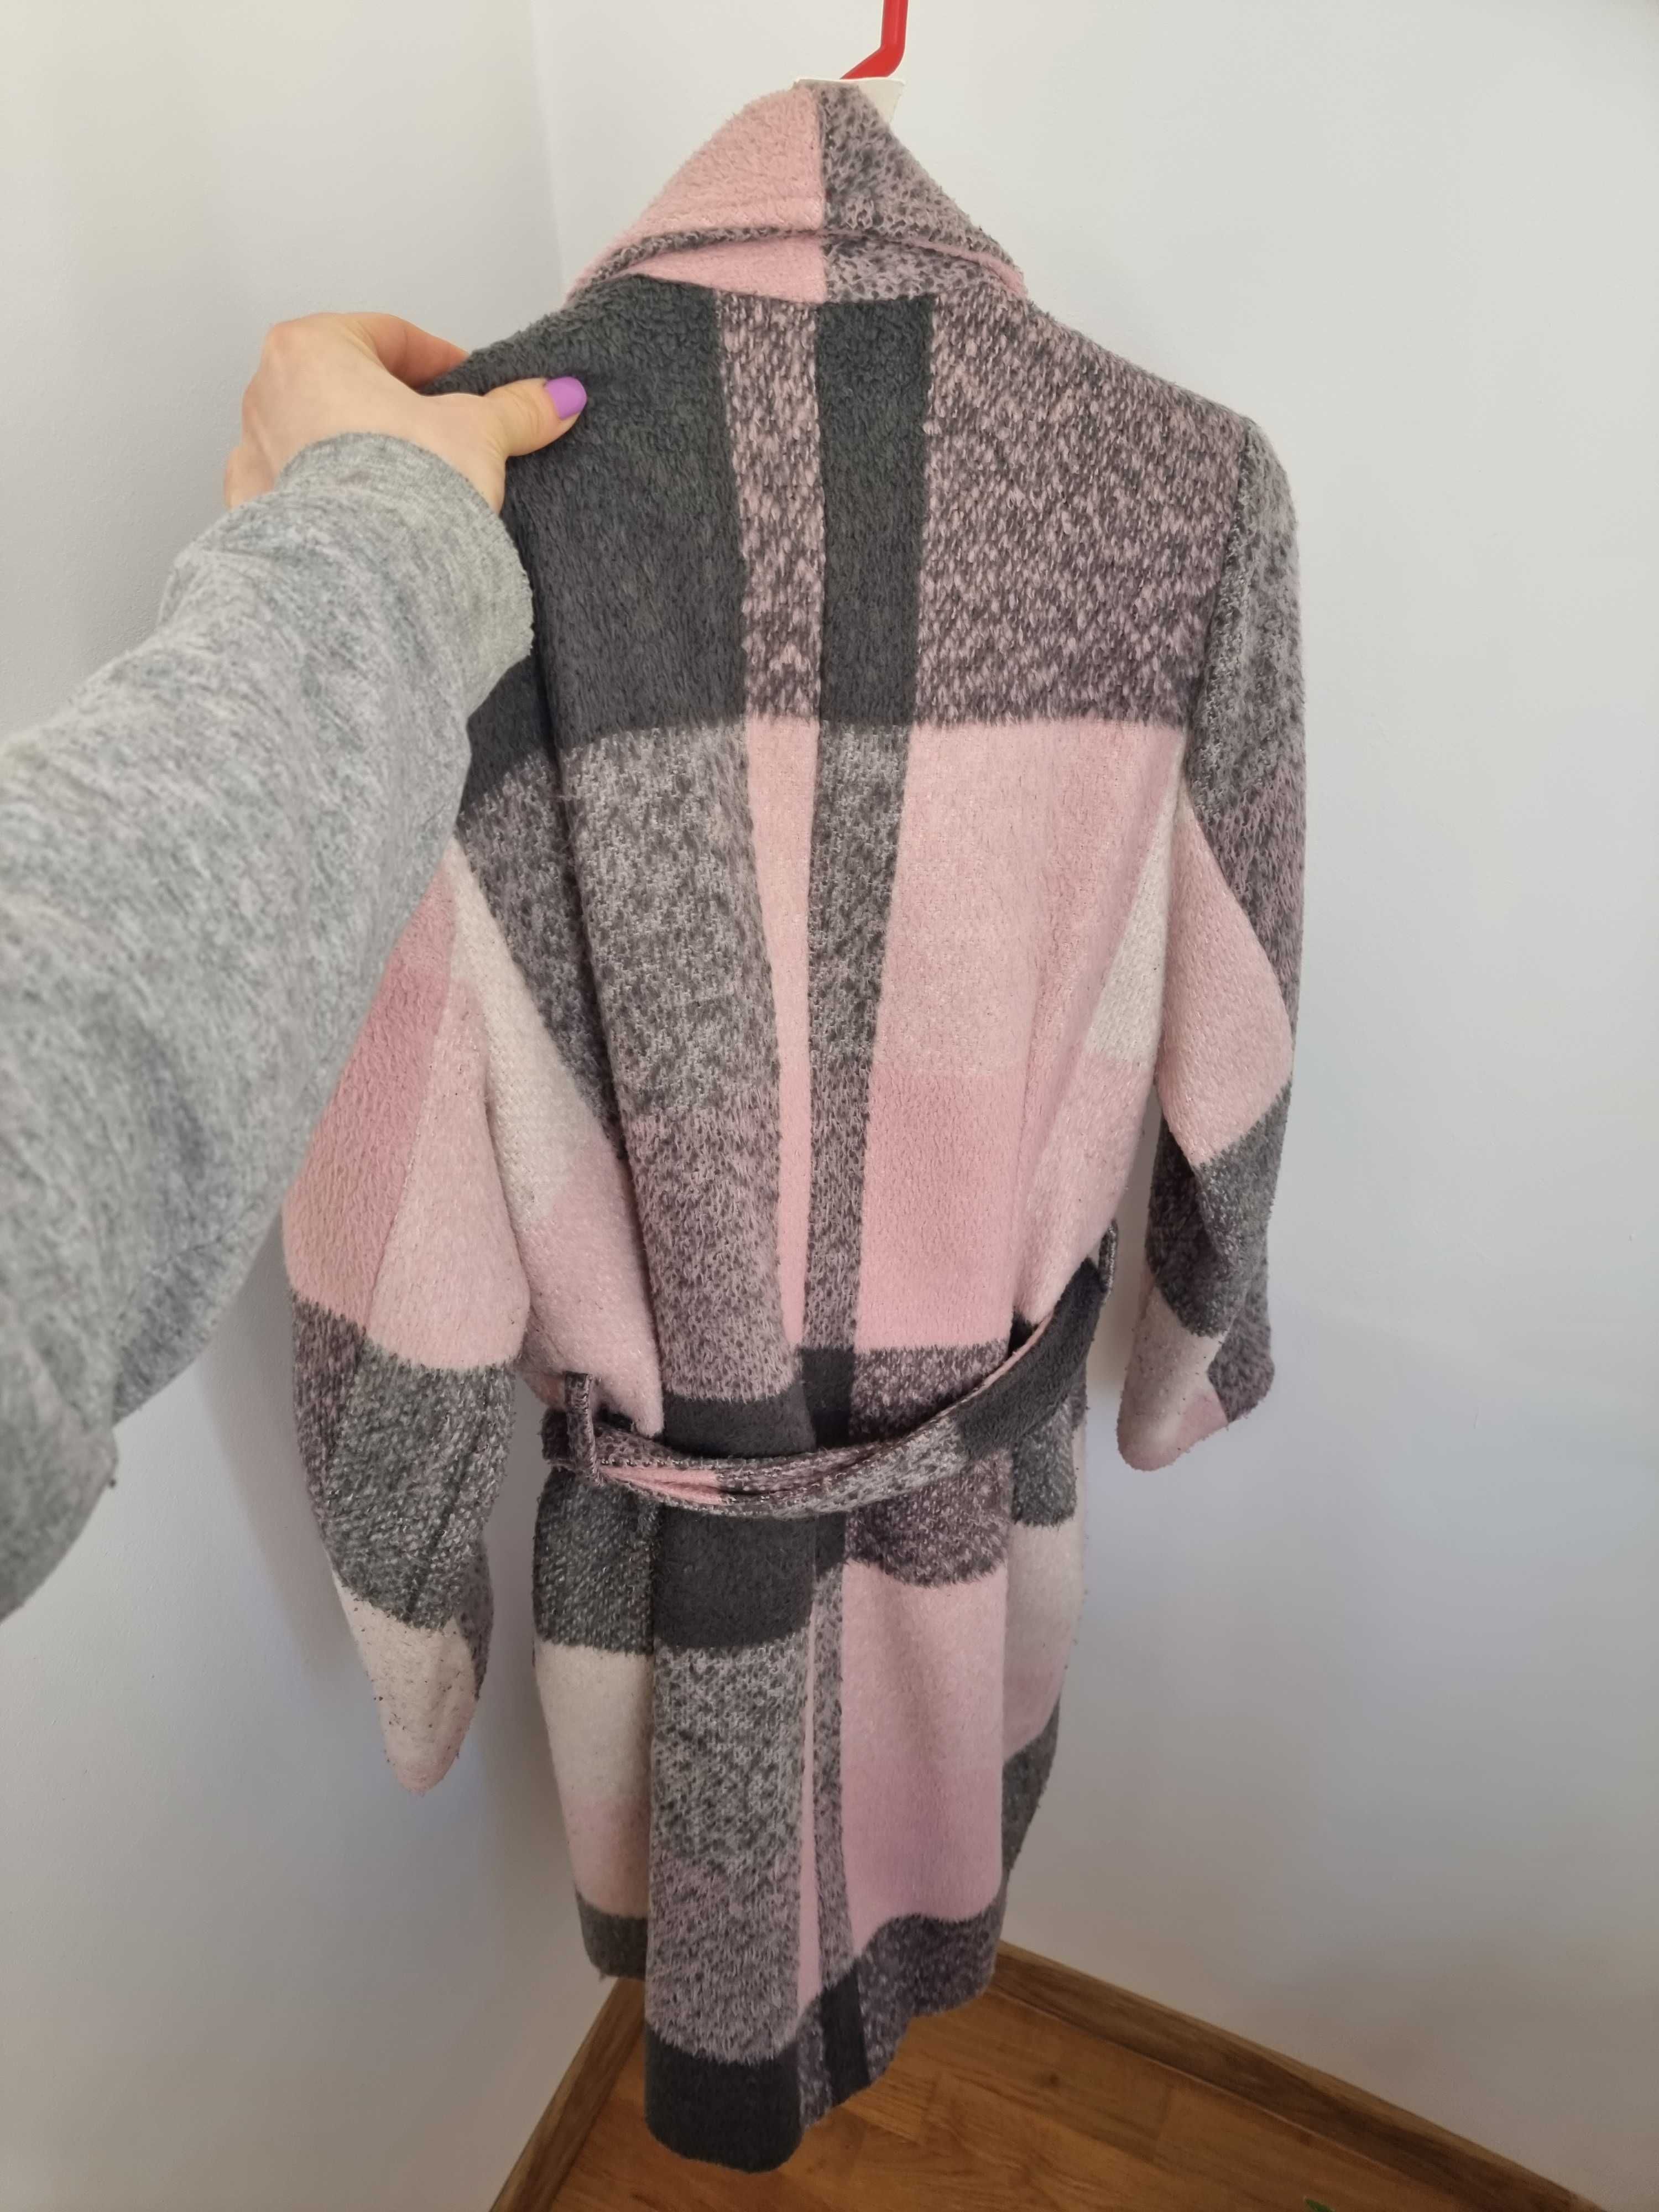 Palton modern roz/gri cu cordon talie